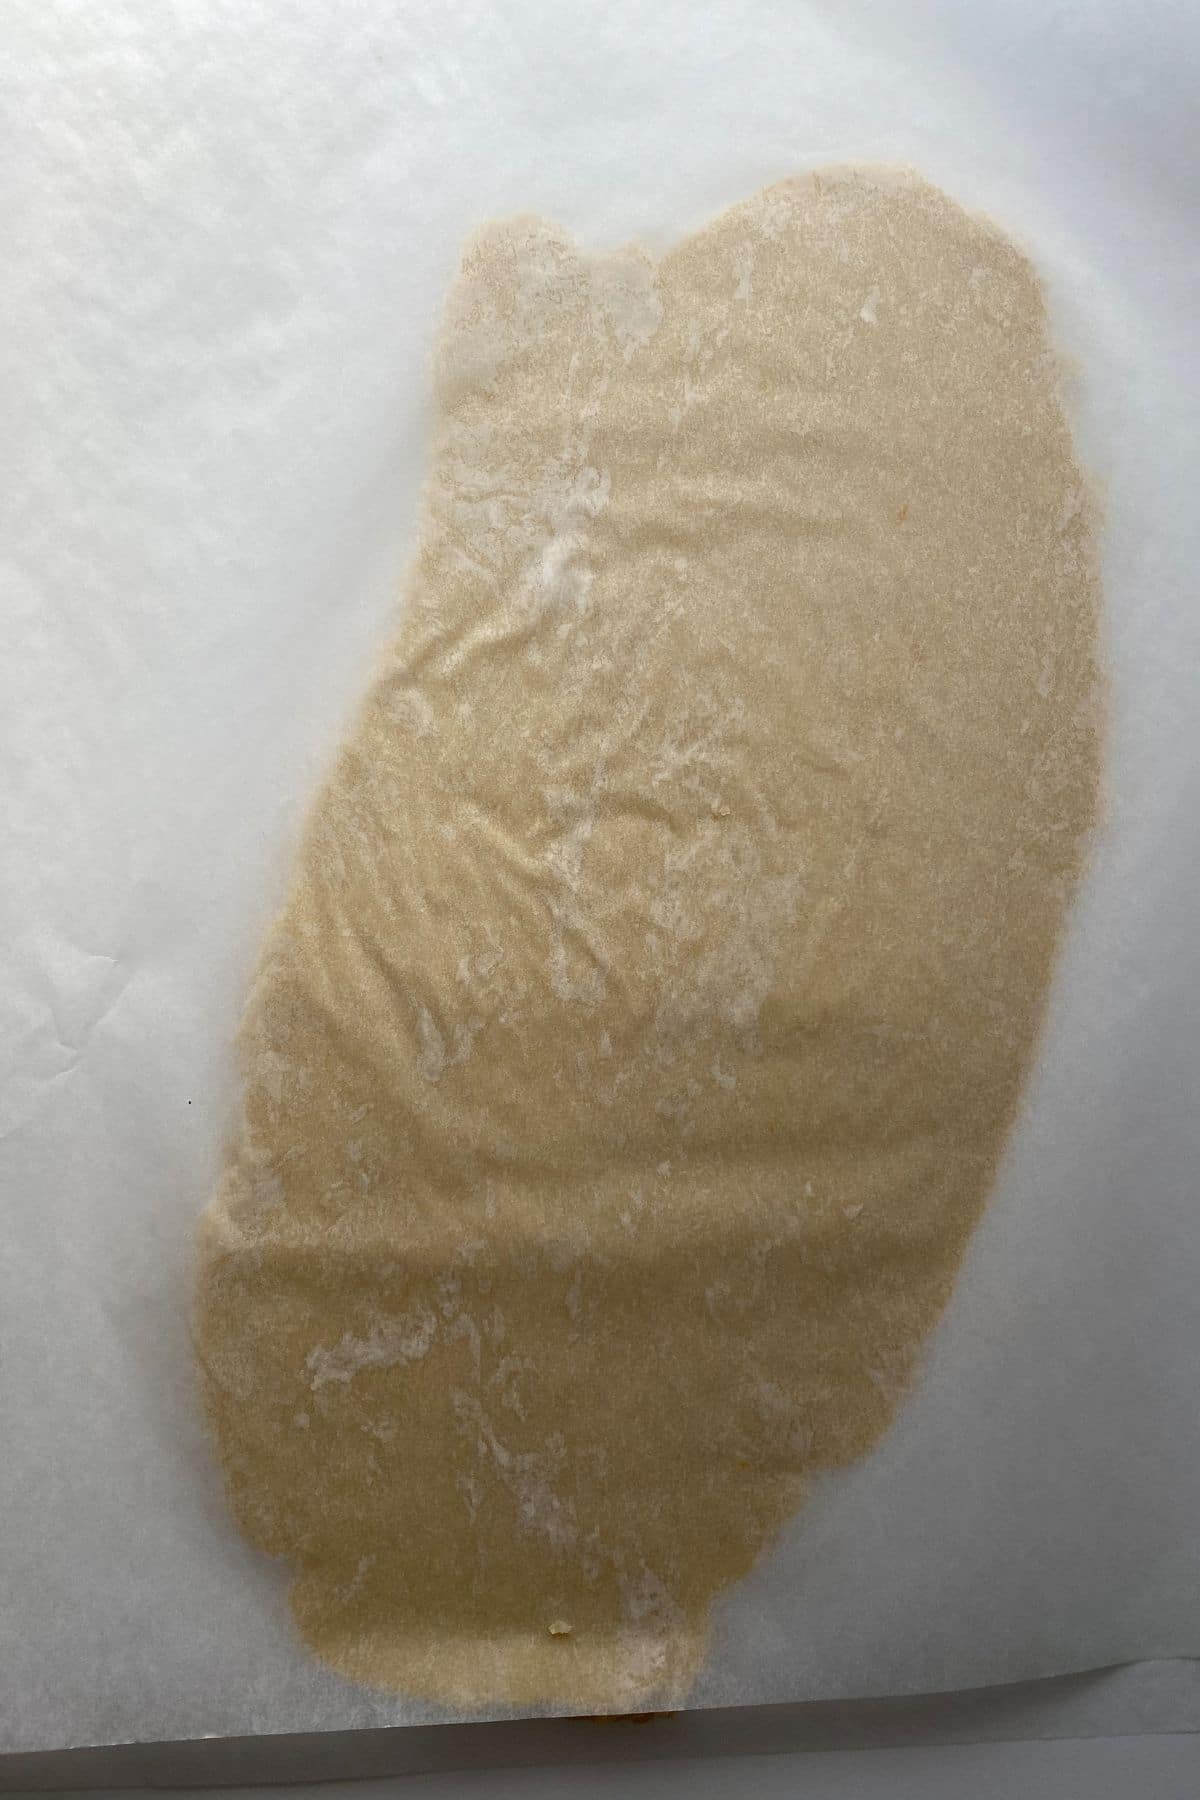 Dough between wax paper rolled flat